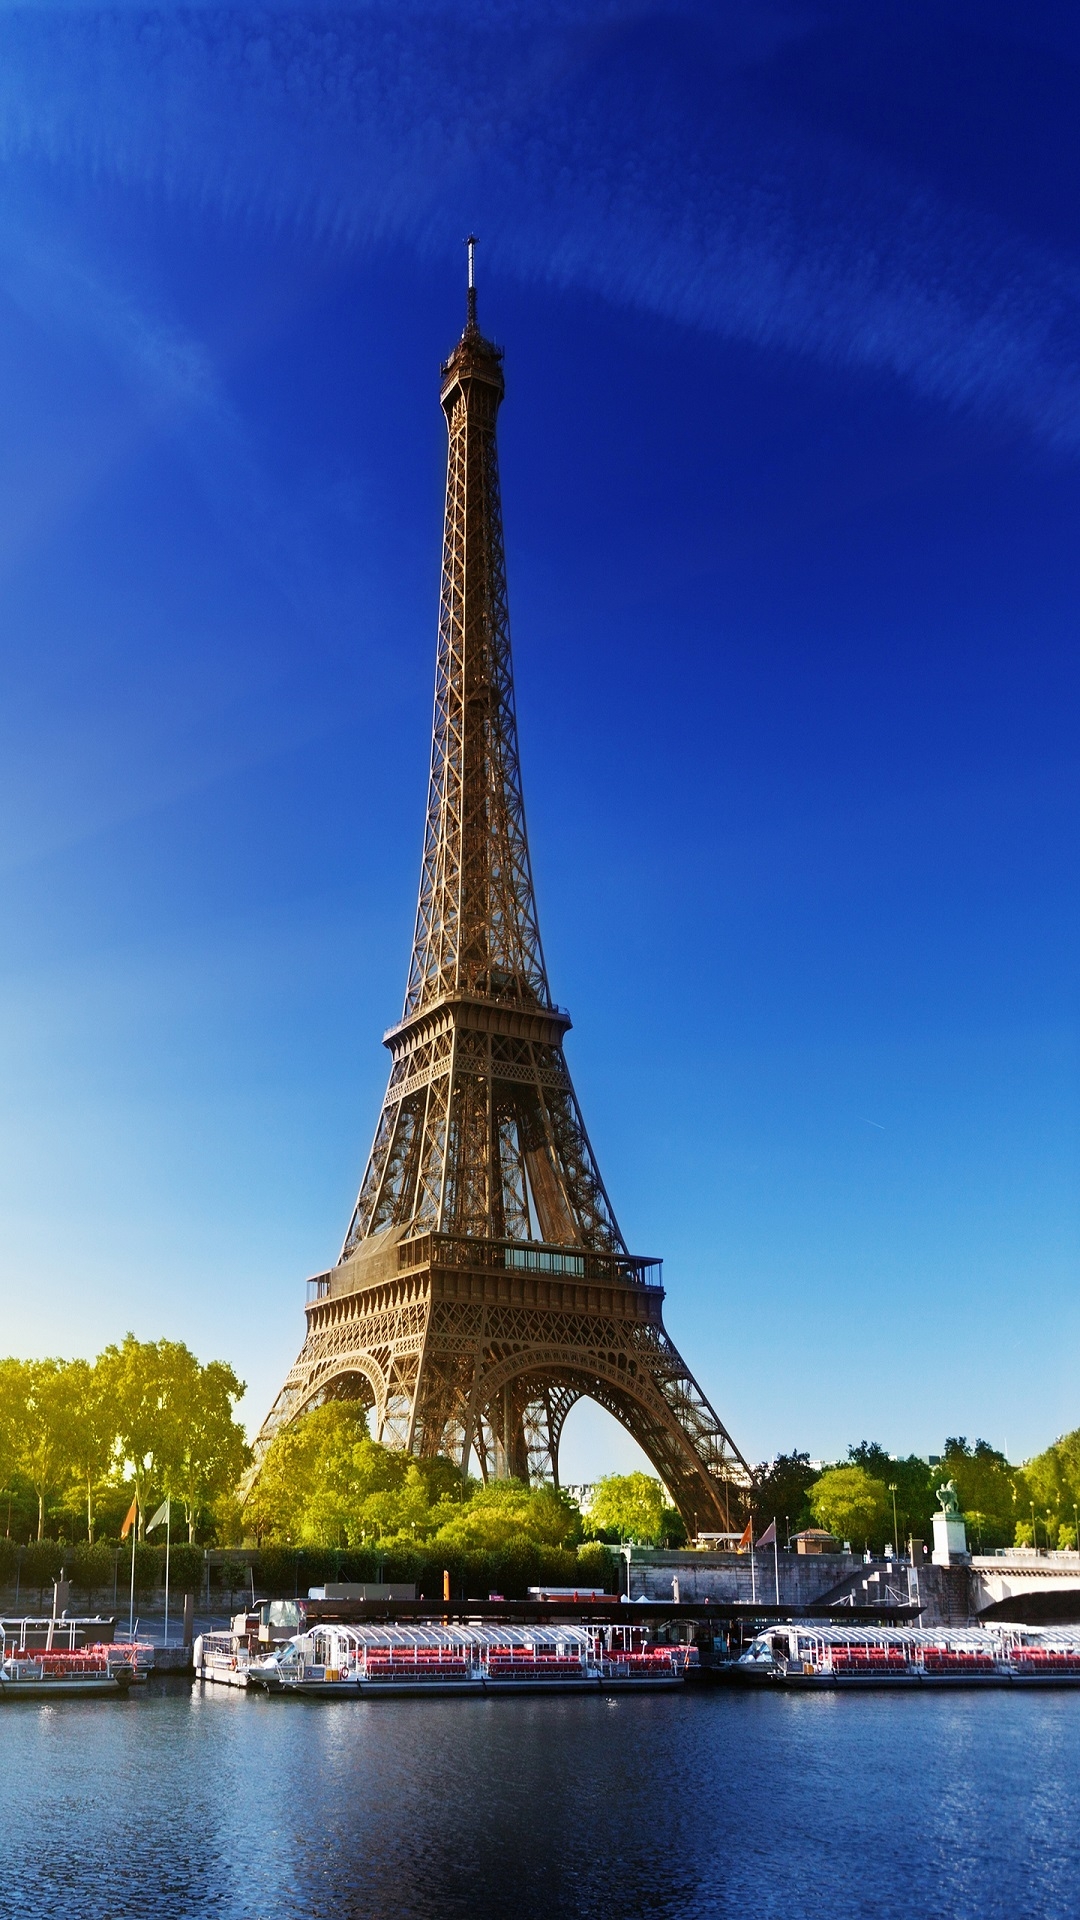 Eiffel Tower Paris for Apple iPhone 6S & 7 Plus resolution